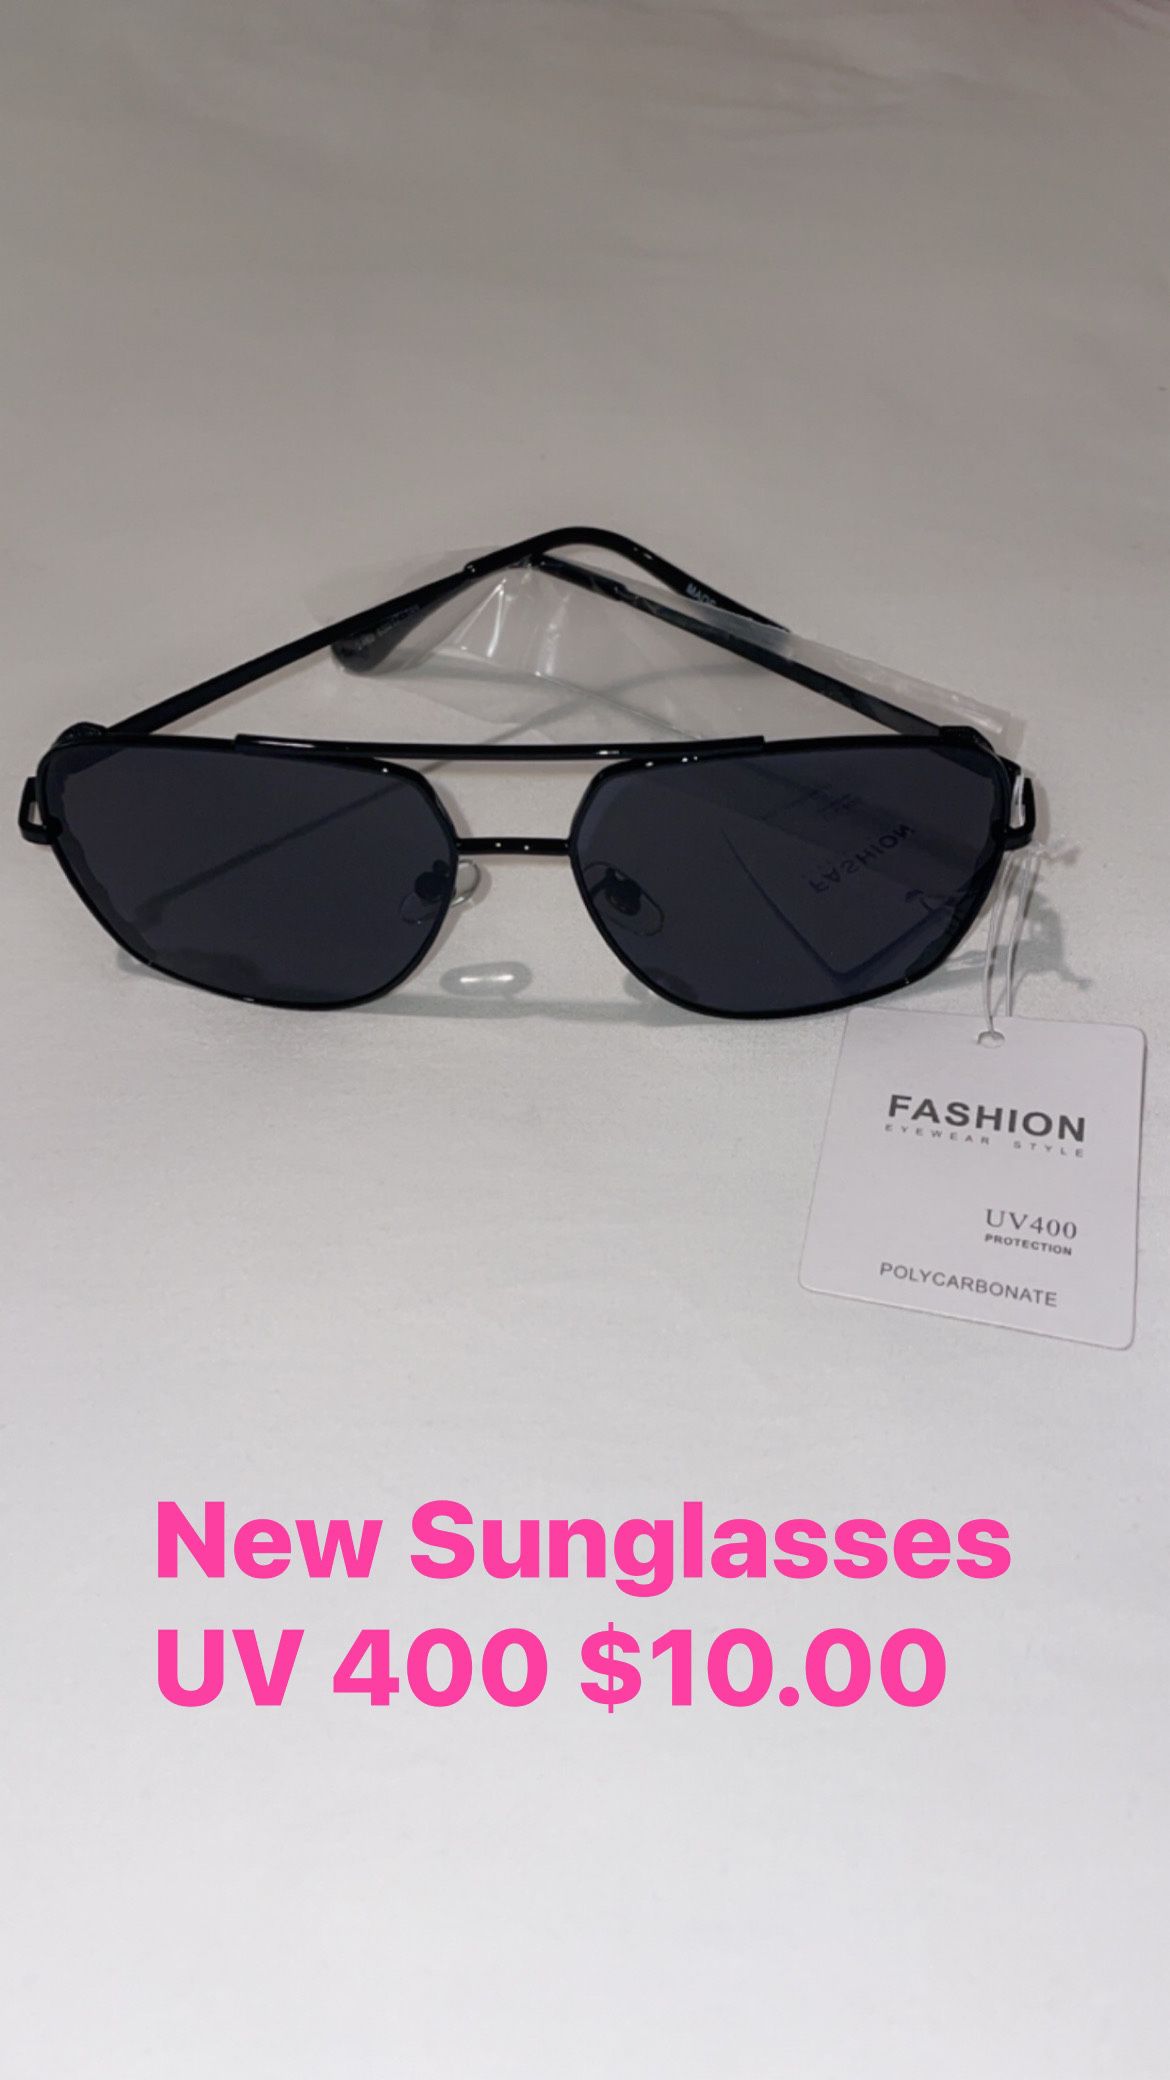 New Sunglasses UV 400